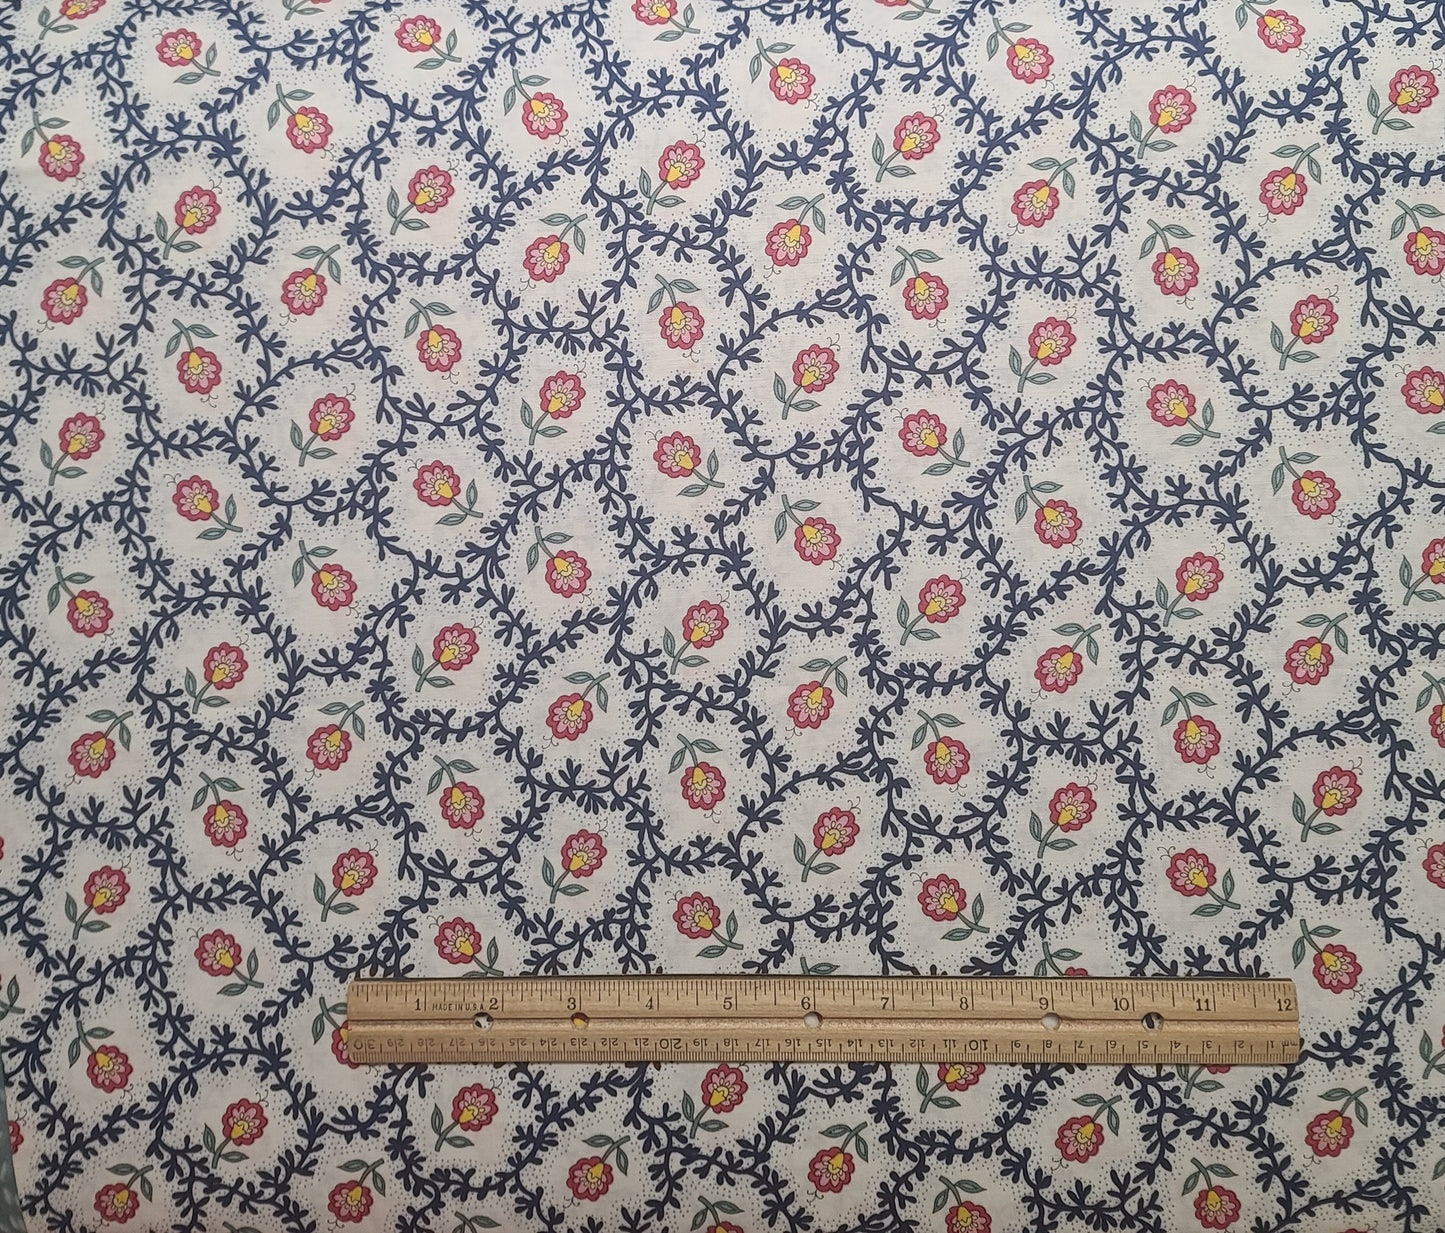 EOB - Provence II by Doreen Speckman for Clothworks - White Fabric / Dark Blue Vine / Red, Pink Flower Print